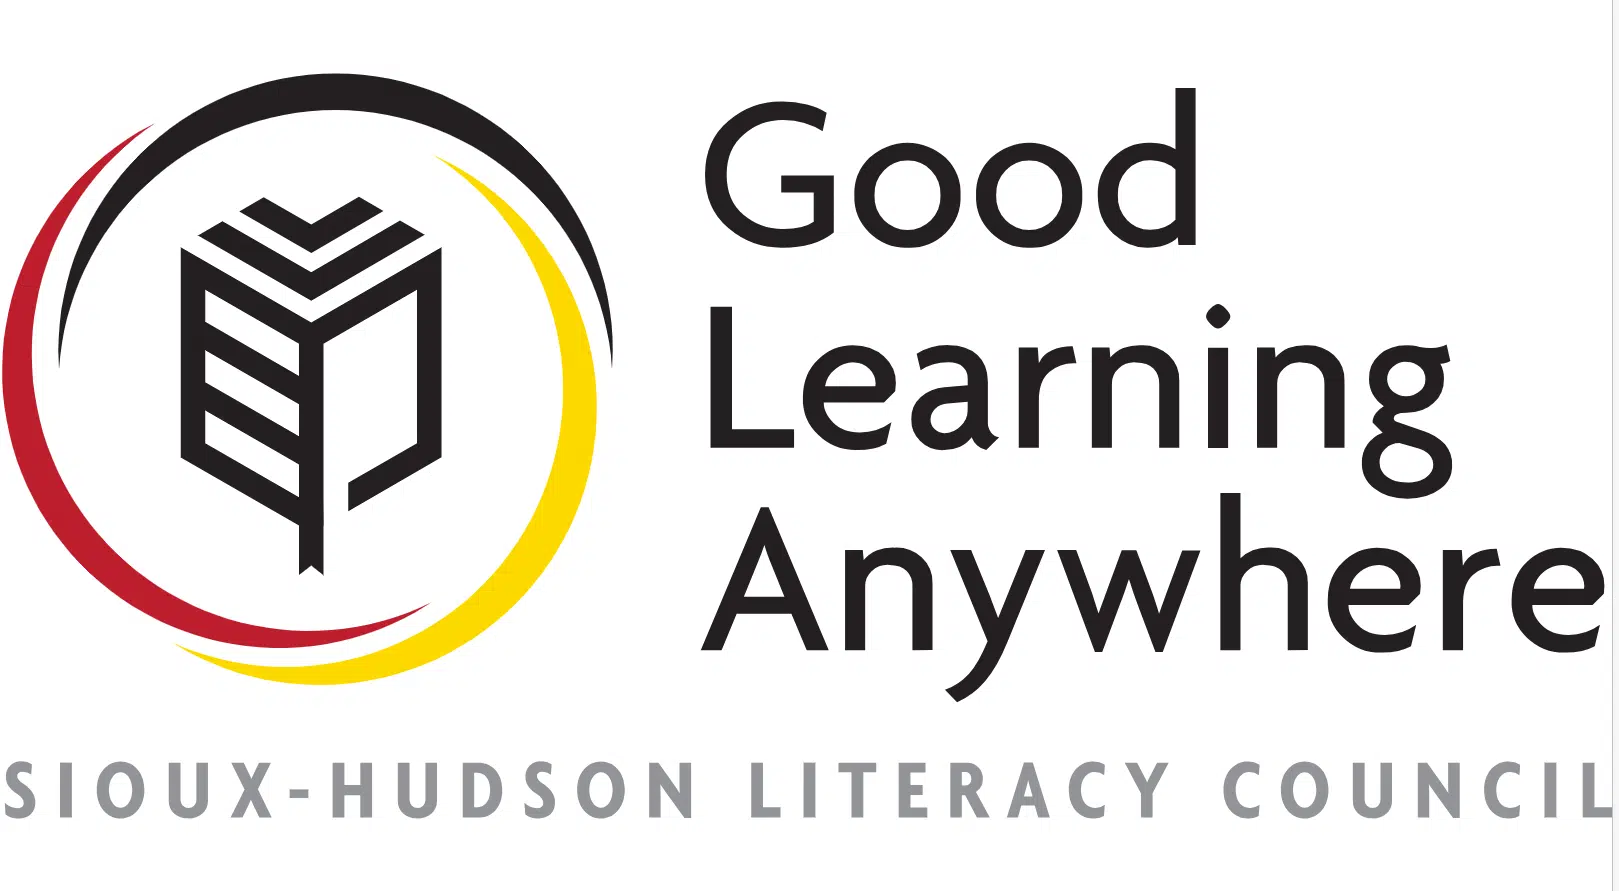 Sioux-Hudson Literacy Council wins award